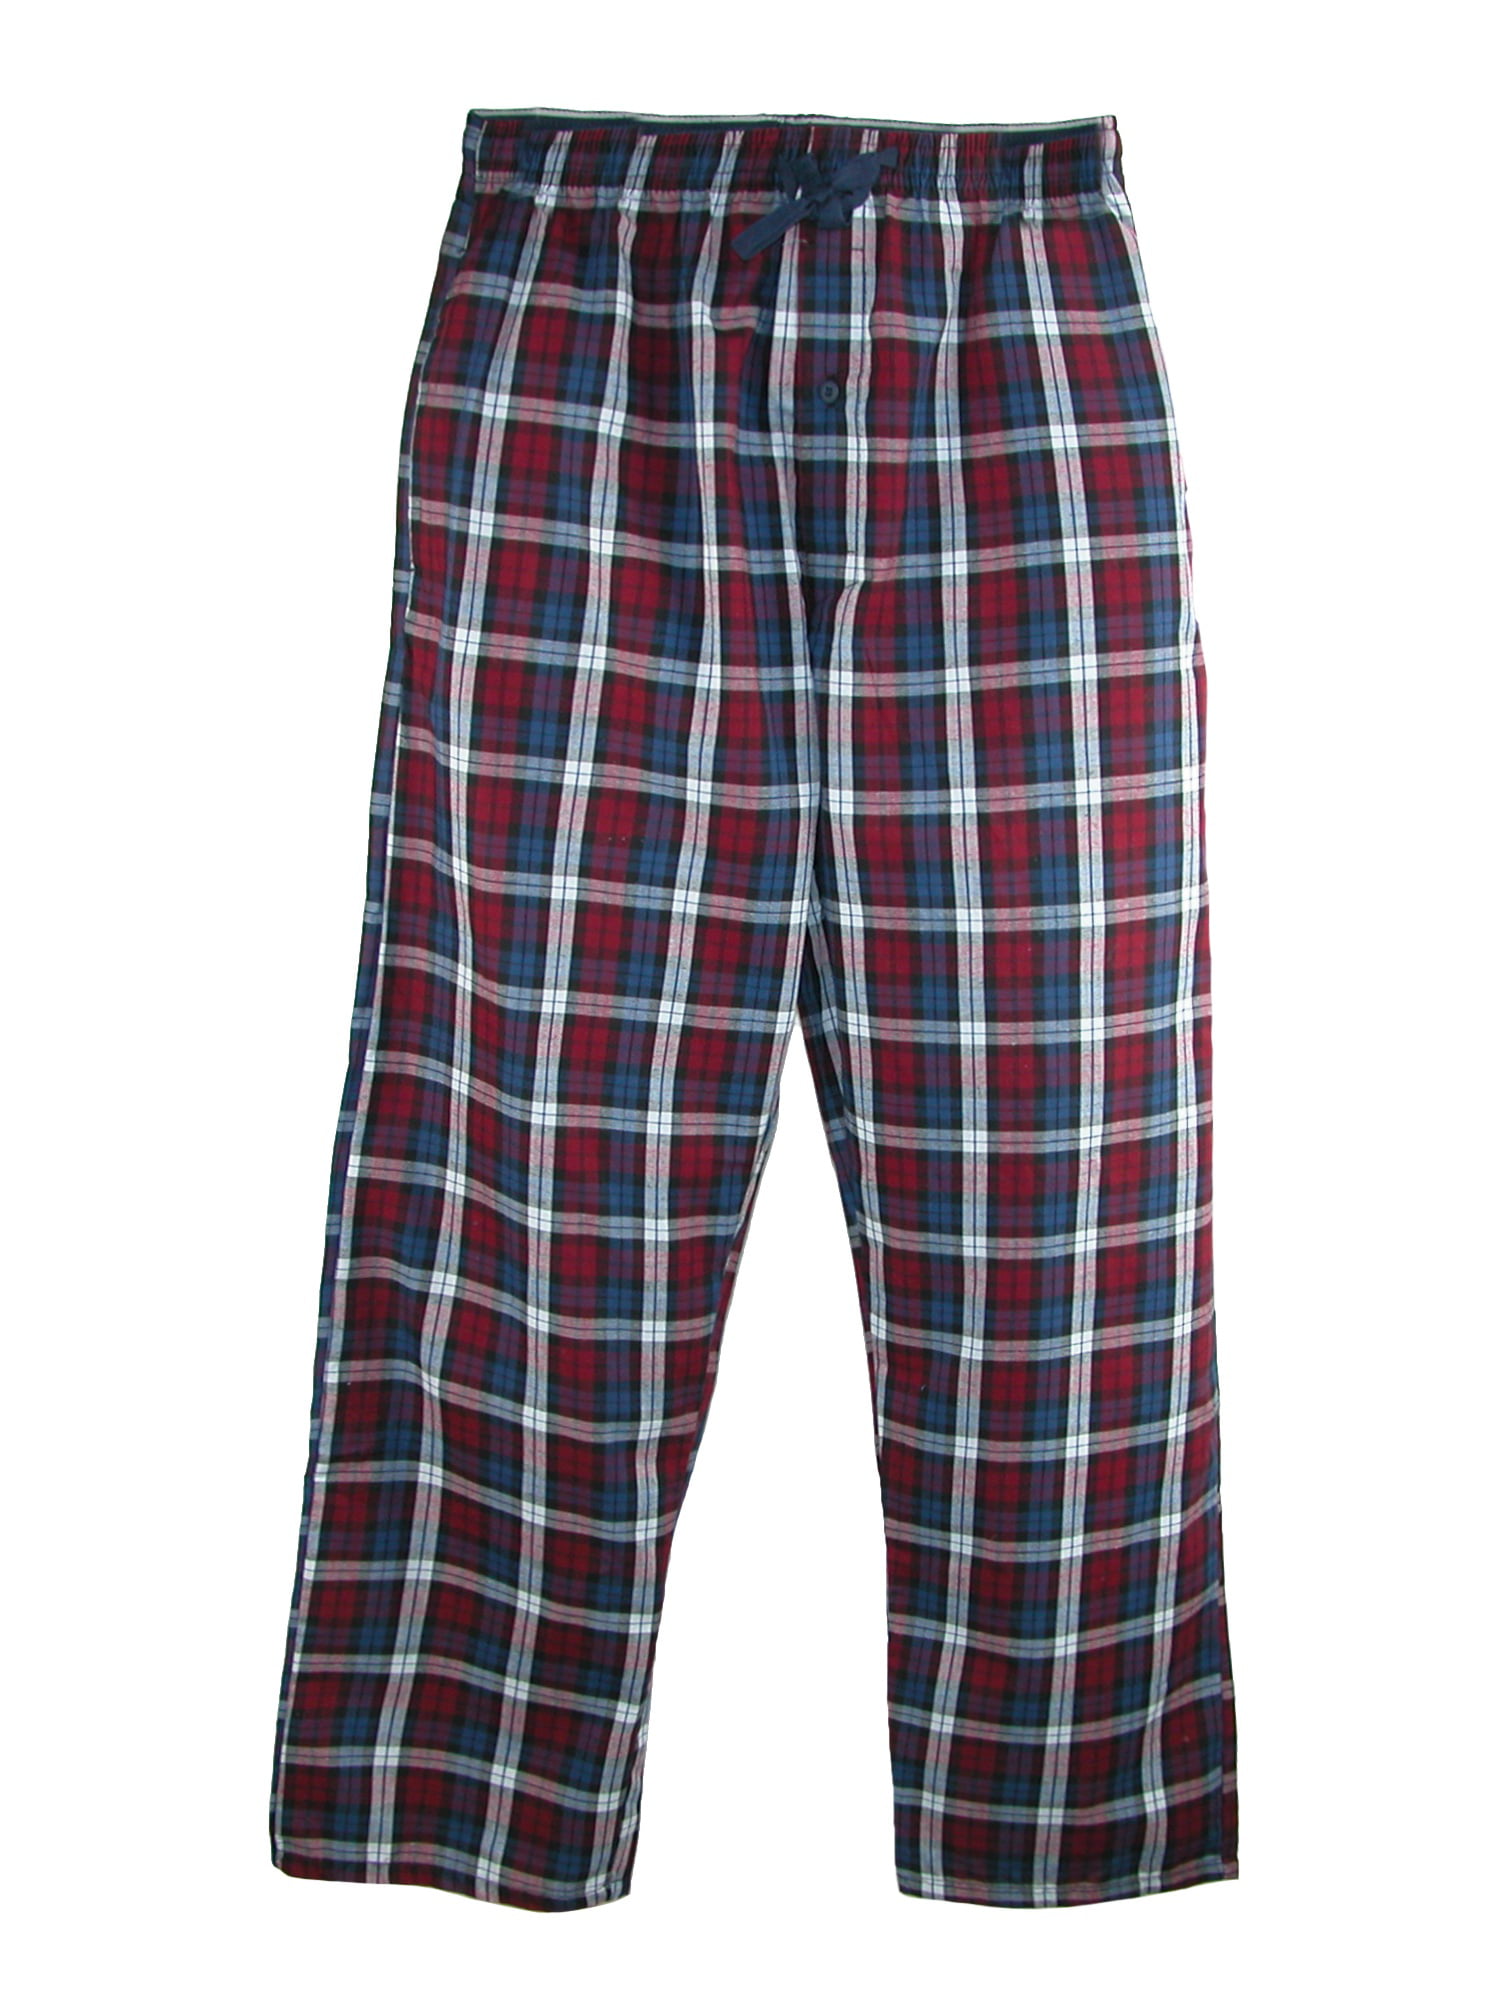 Men's Woven Plaid Drawstring Sleep Pajama Pants - Walmart.com